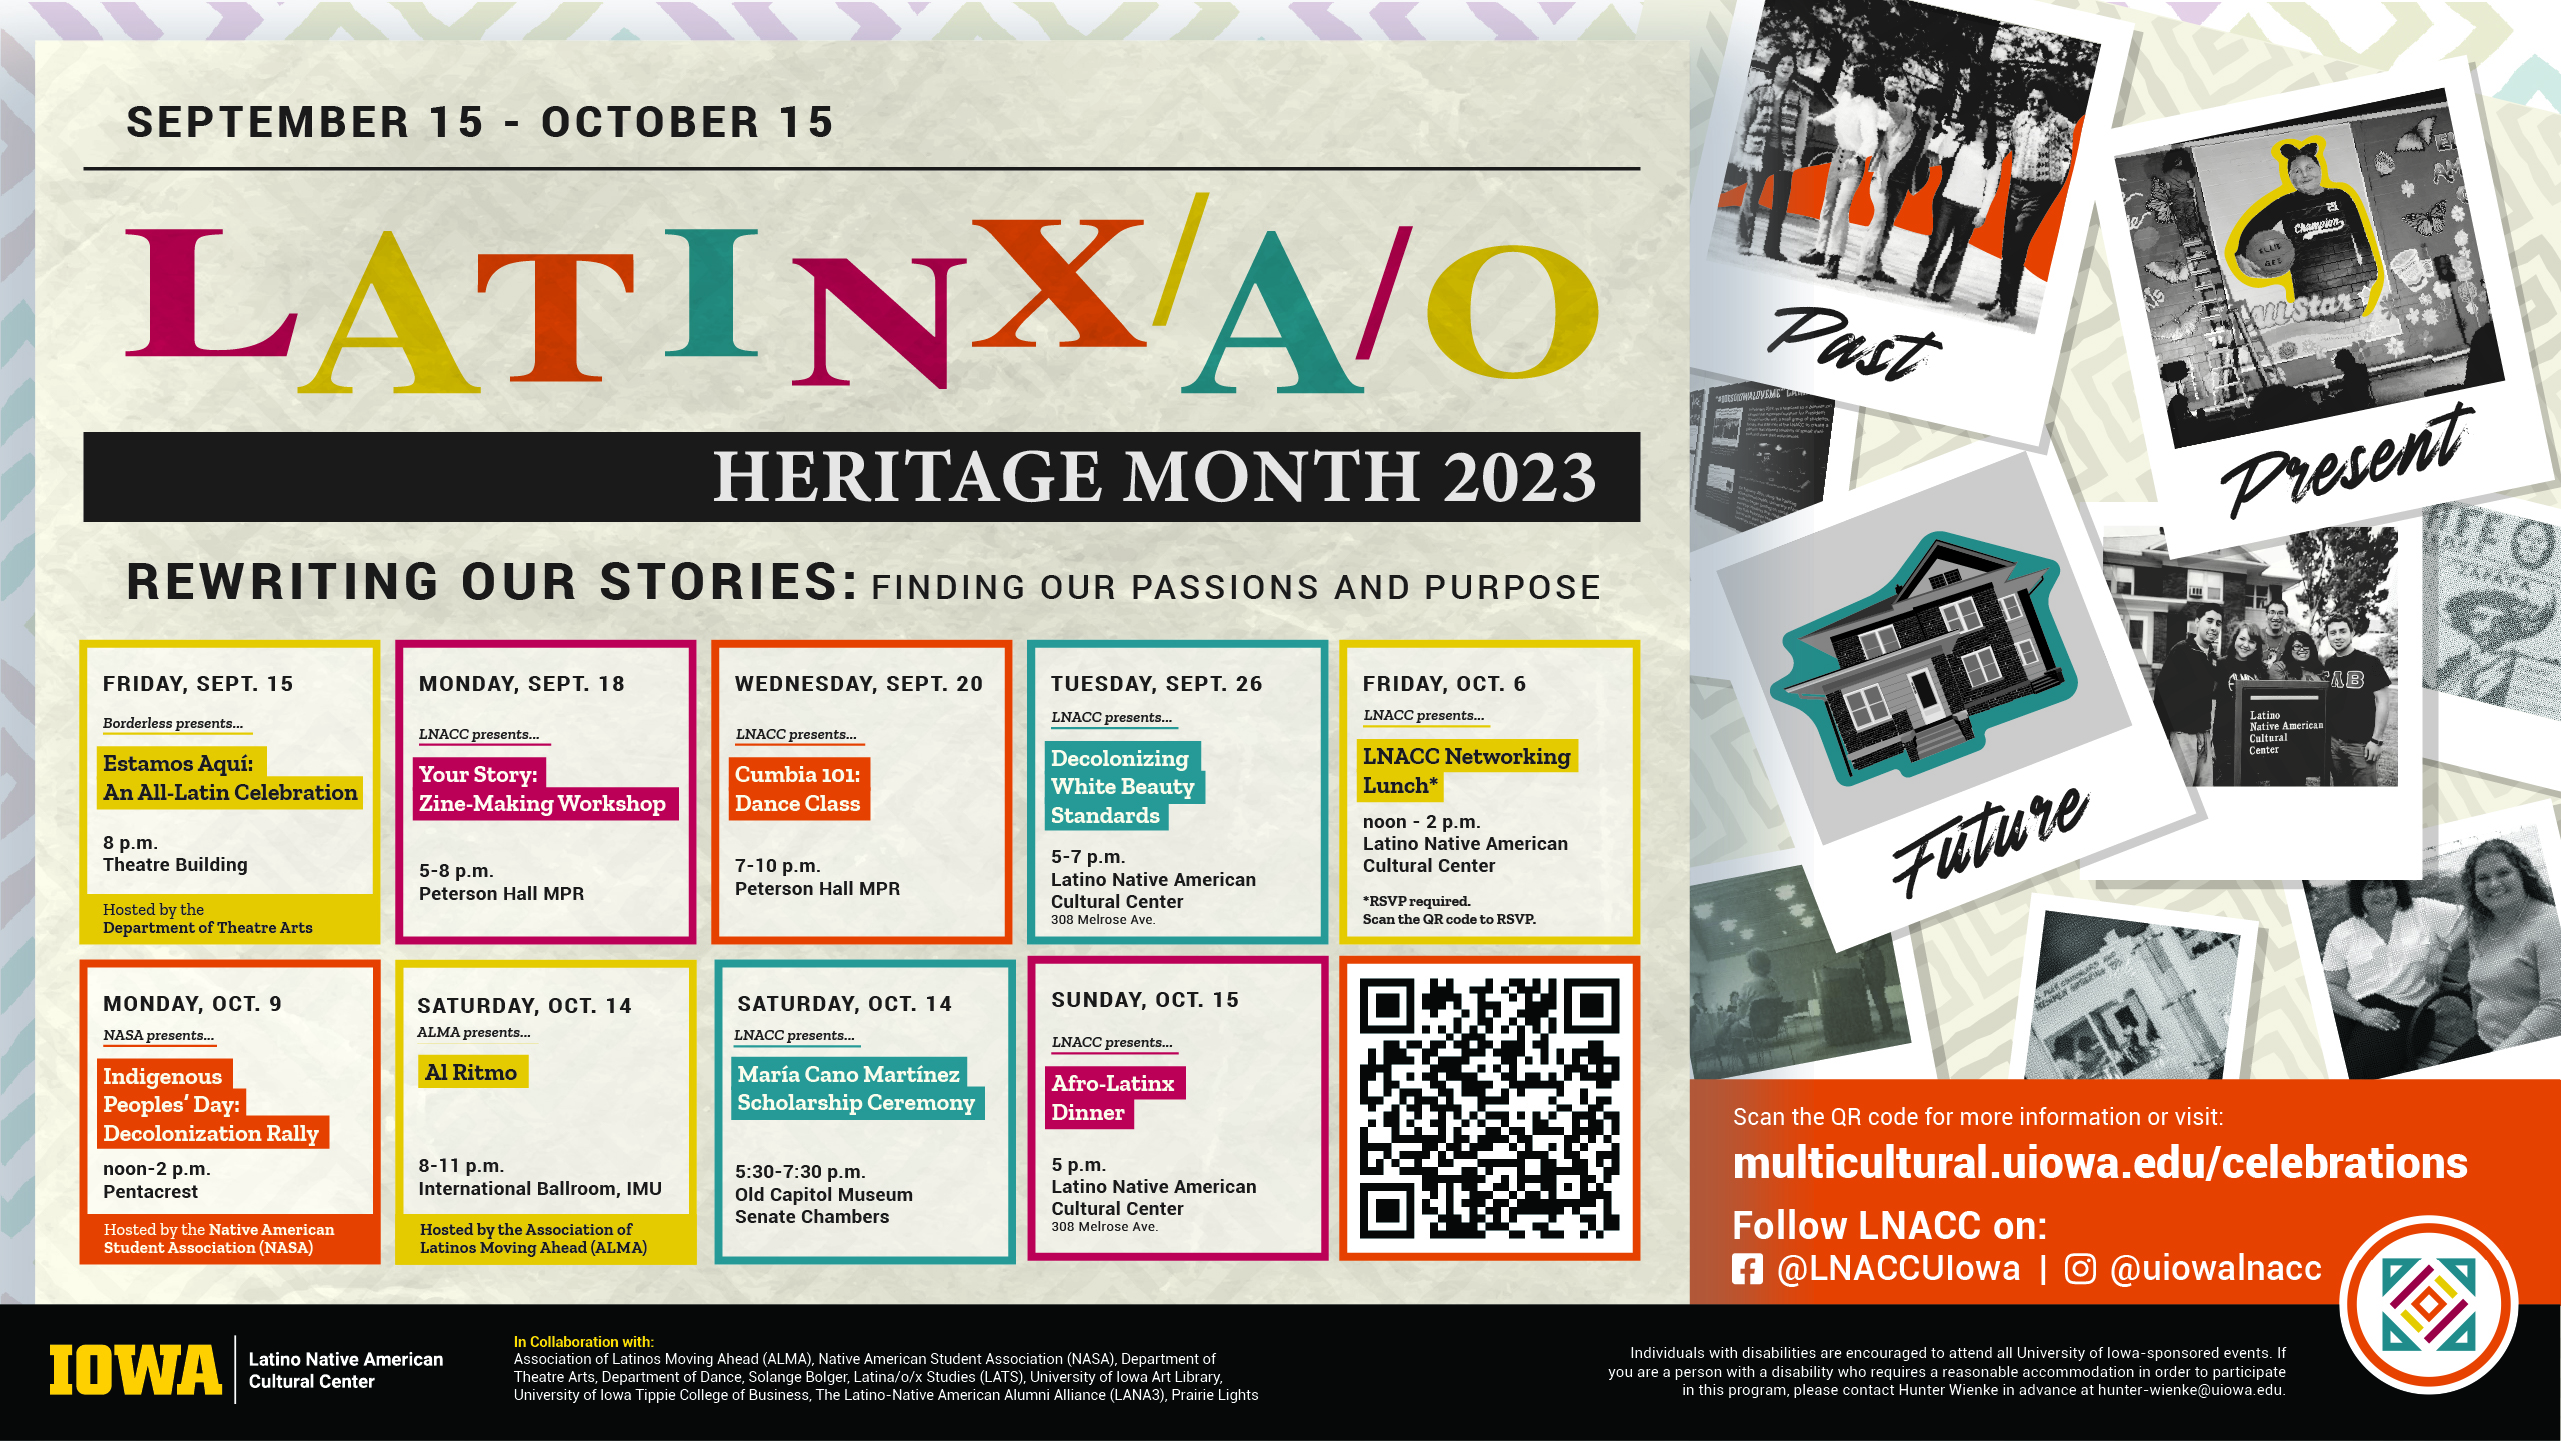 Latinx/a/o Heritage Month, September 15-October 15